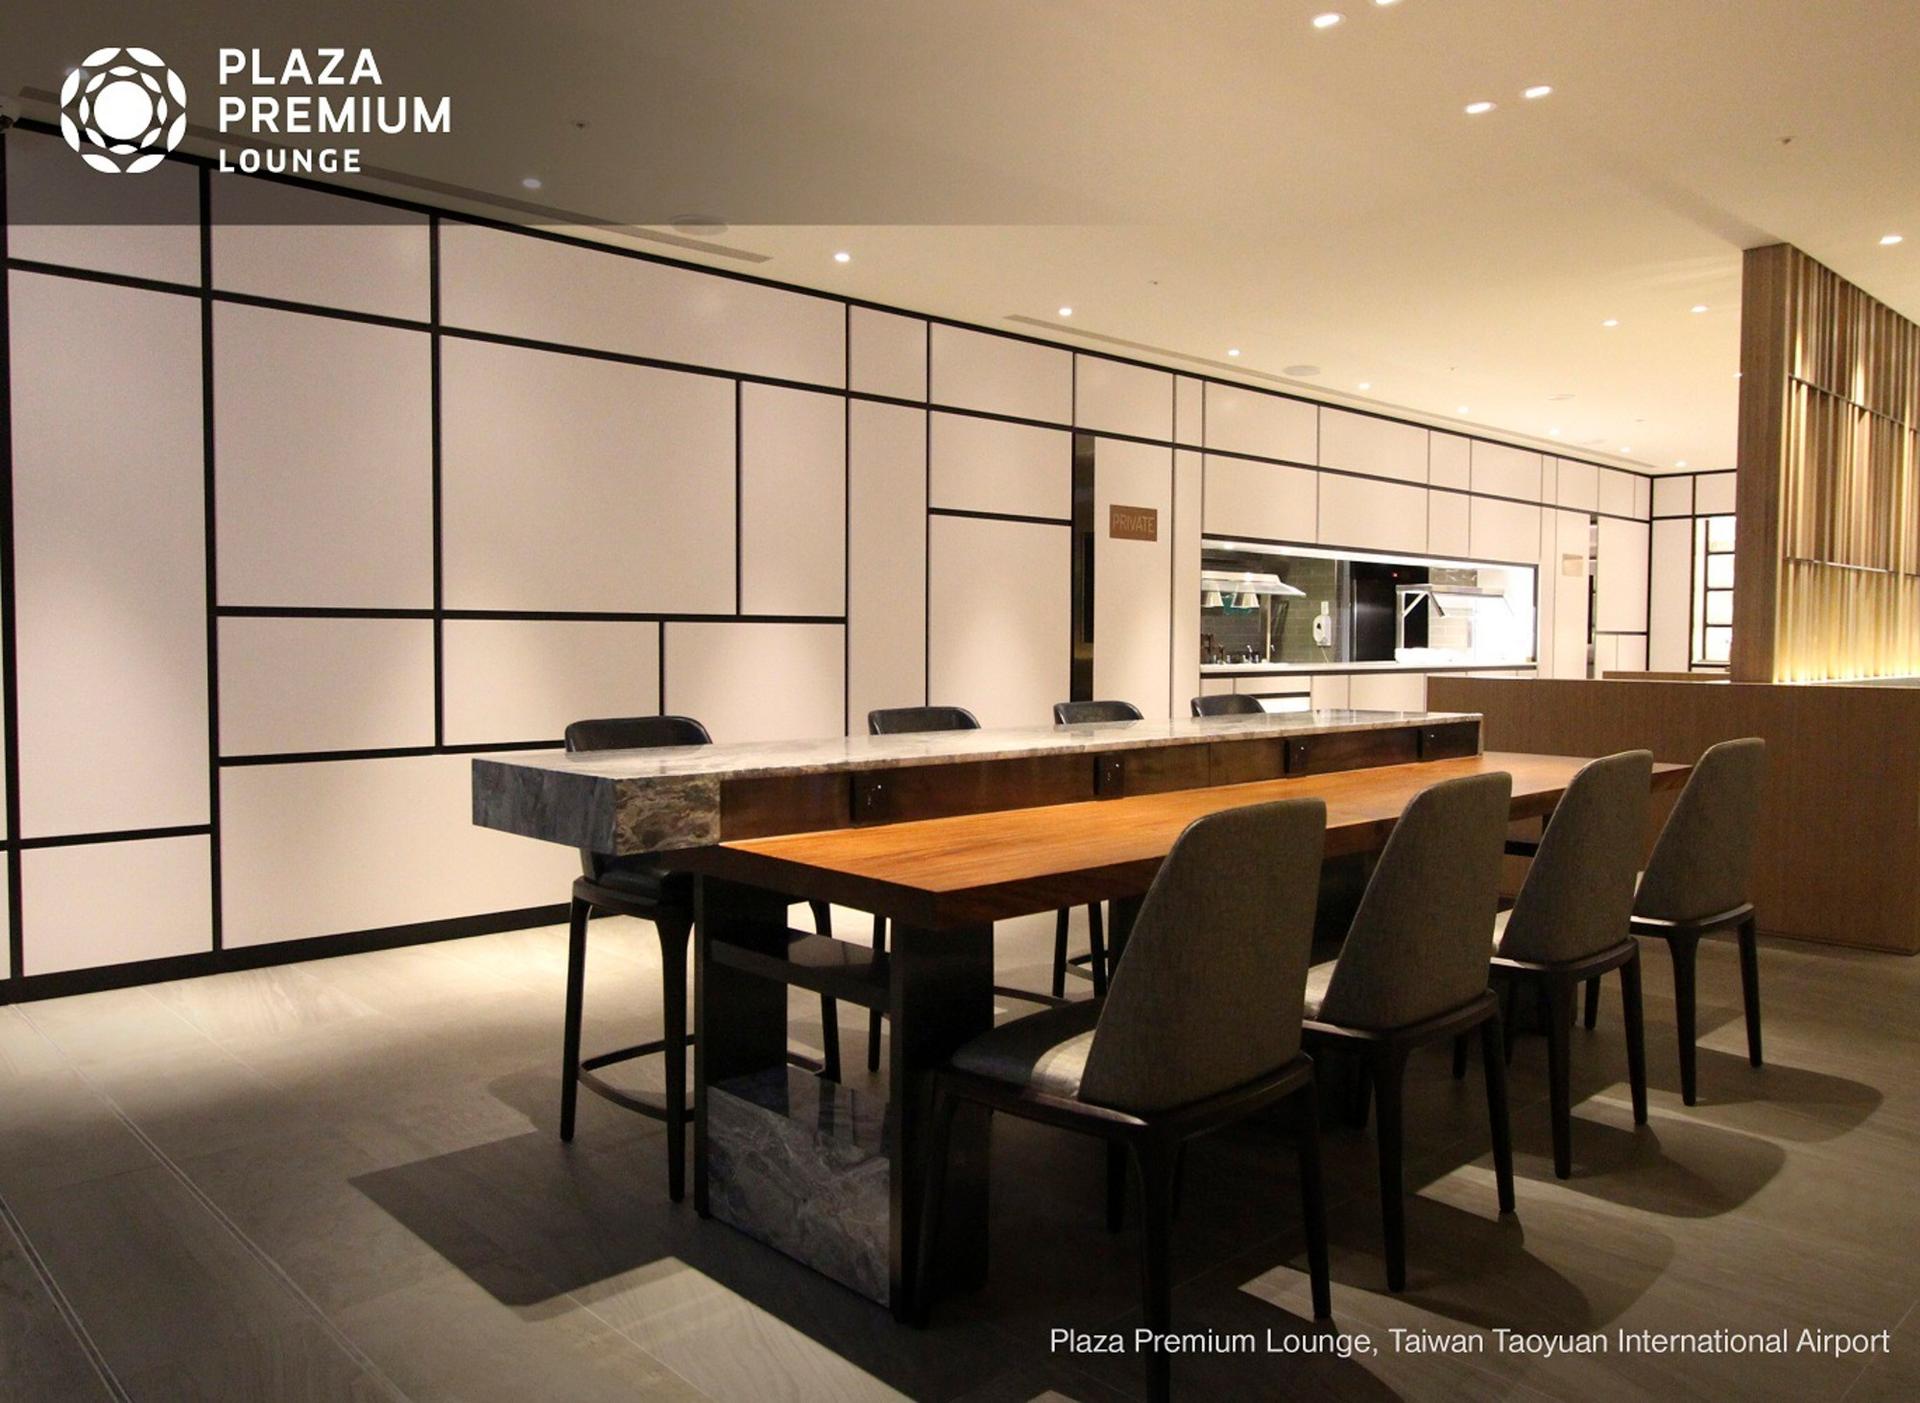 Plaza Premium Lounge (Zone A) image 21 of 79